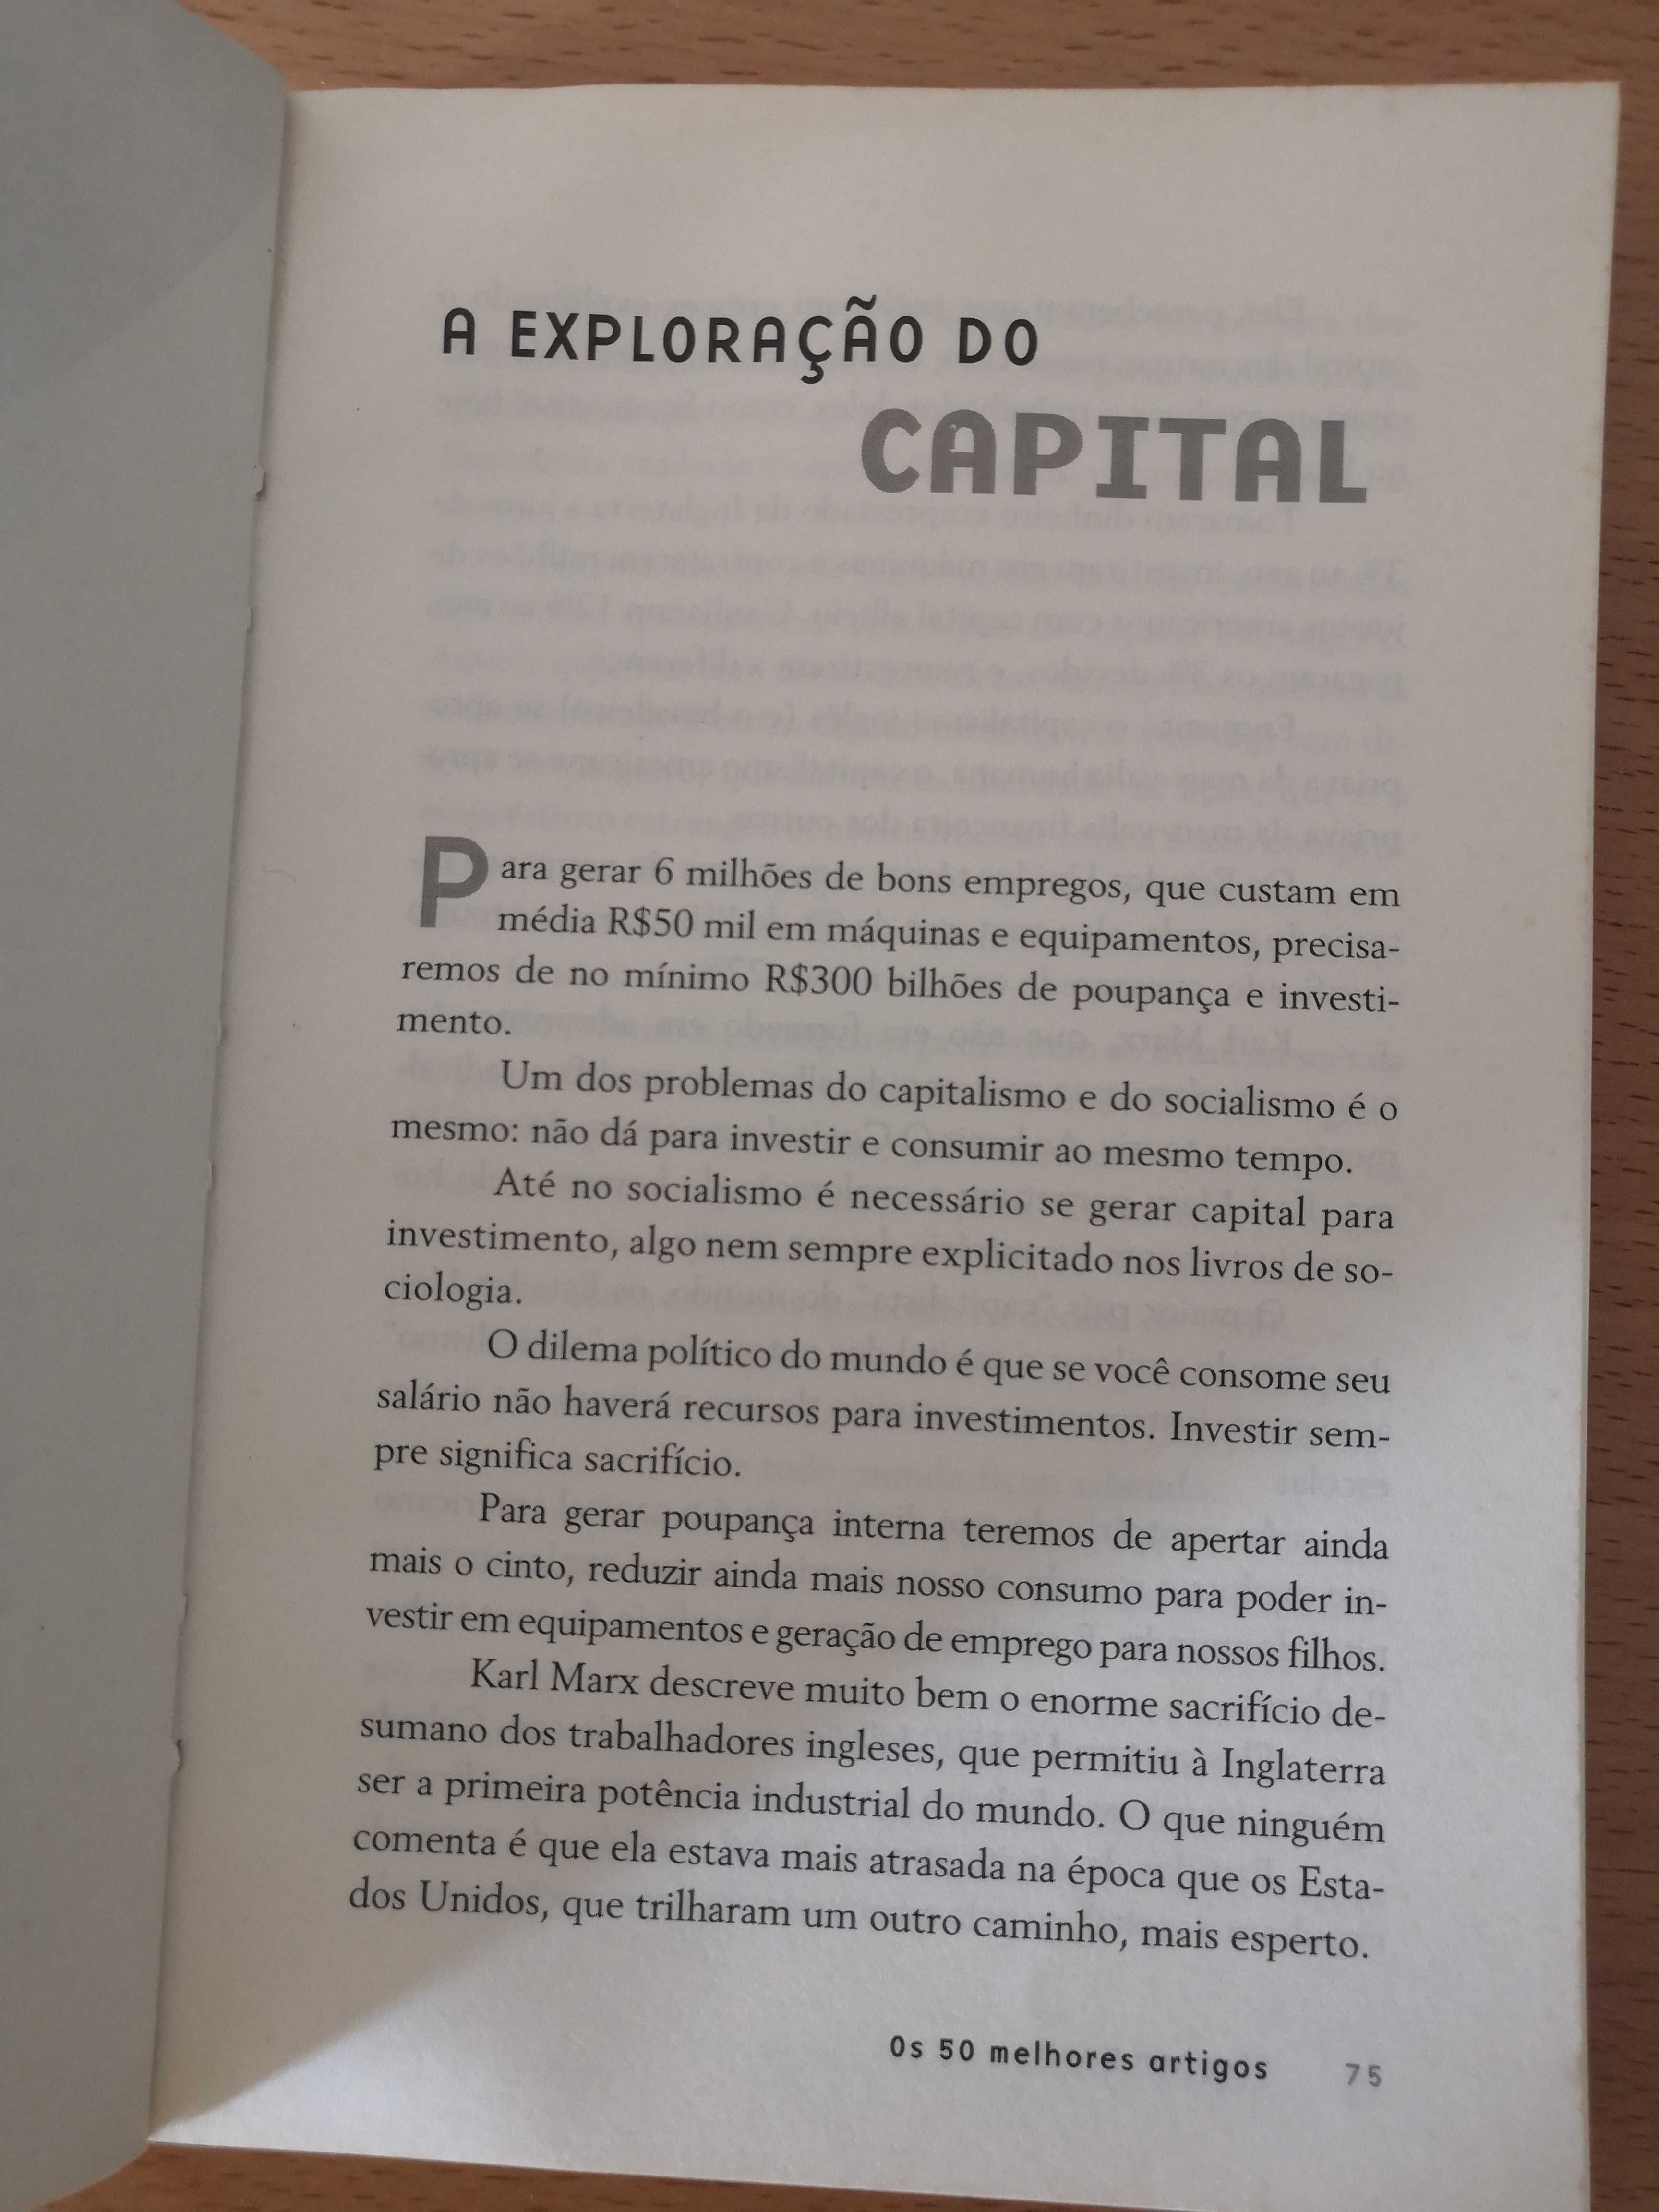 Livro de Stephen Kanitz sobre Brasil